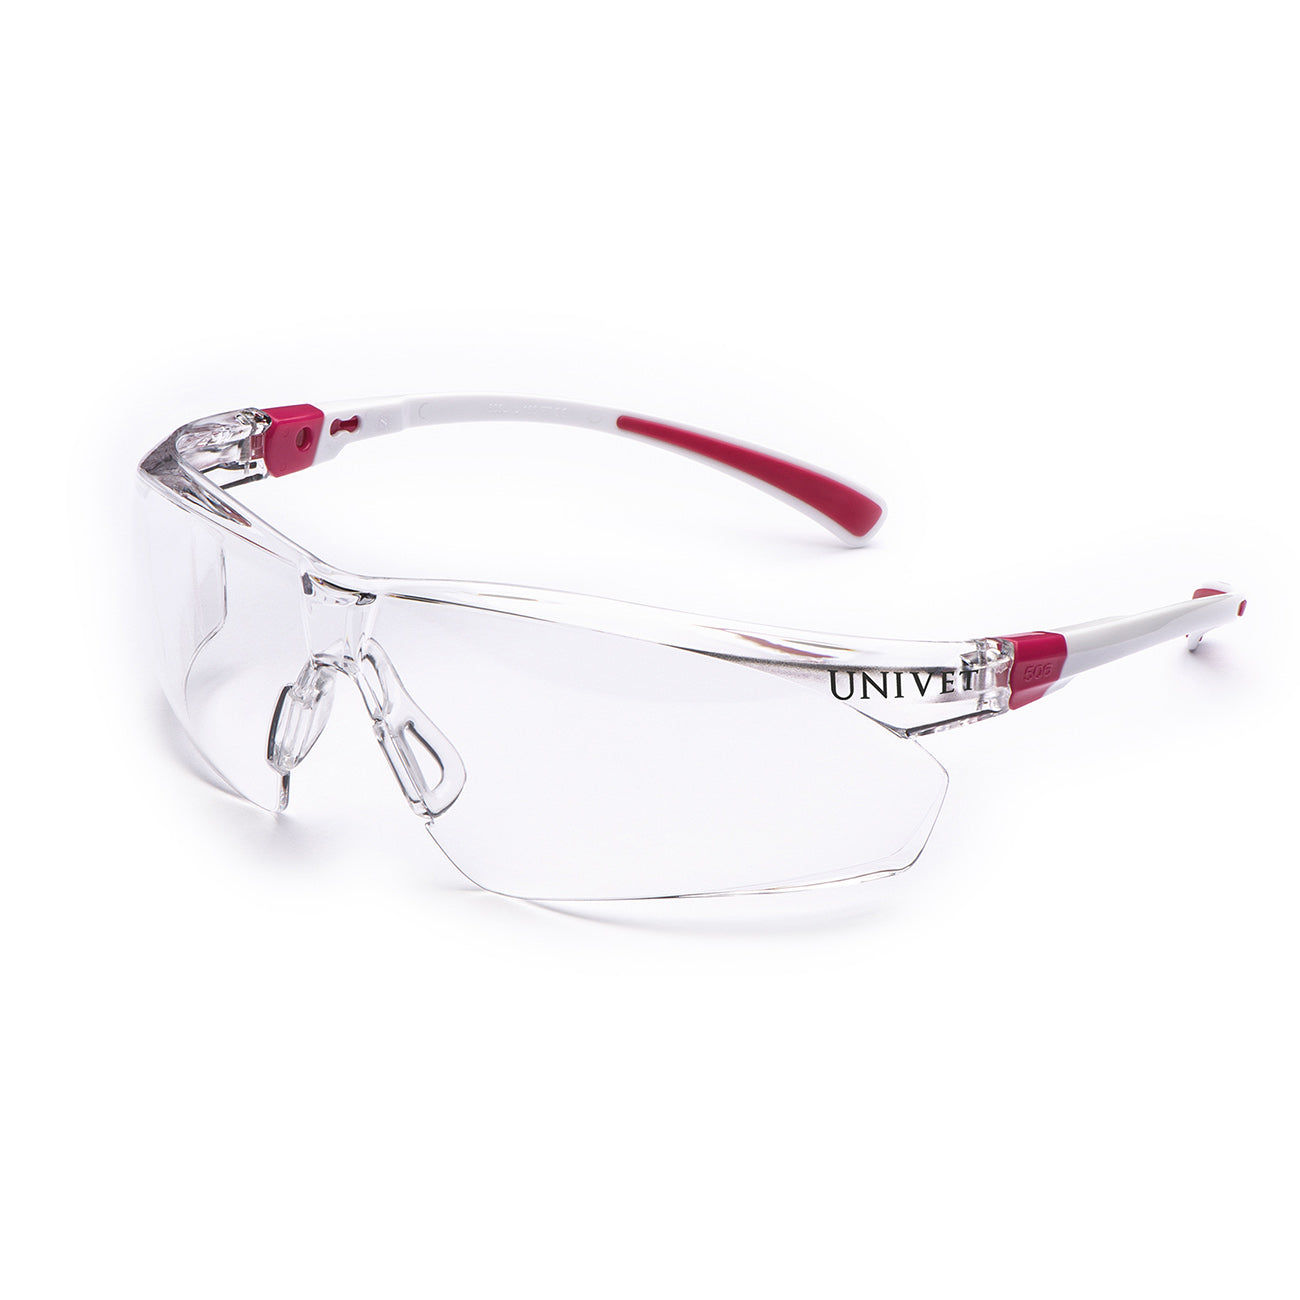 Univet 506UP Clear Plus Safety Glasses - 506U.03.02.00